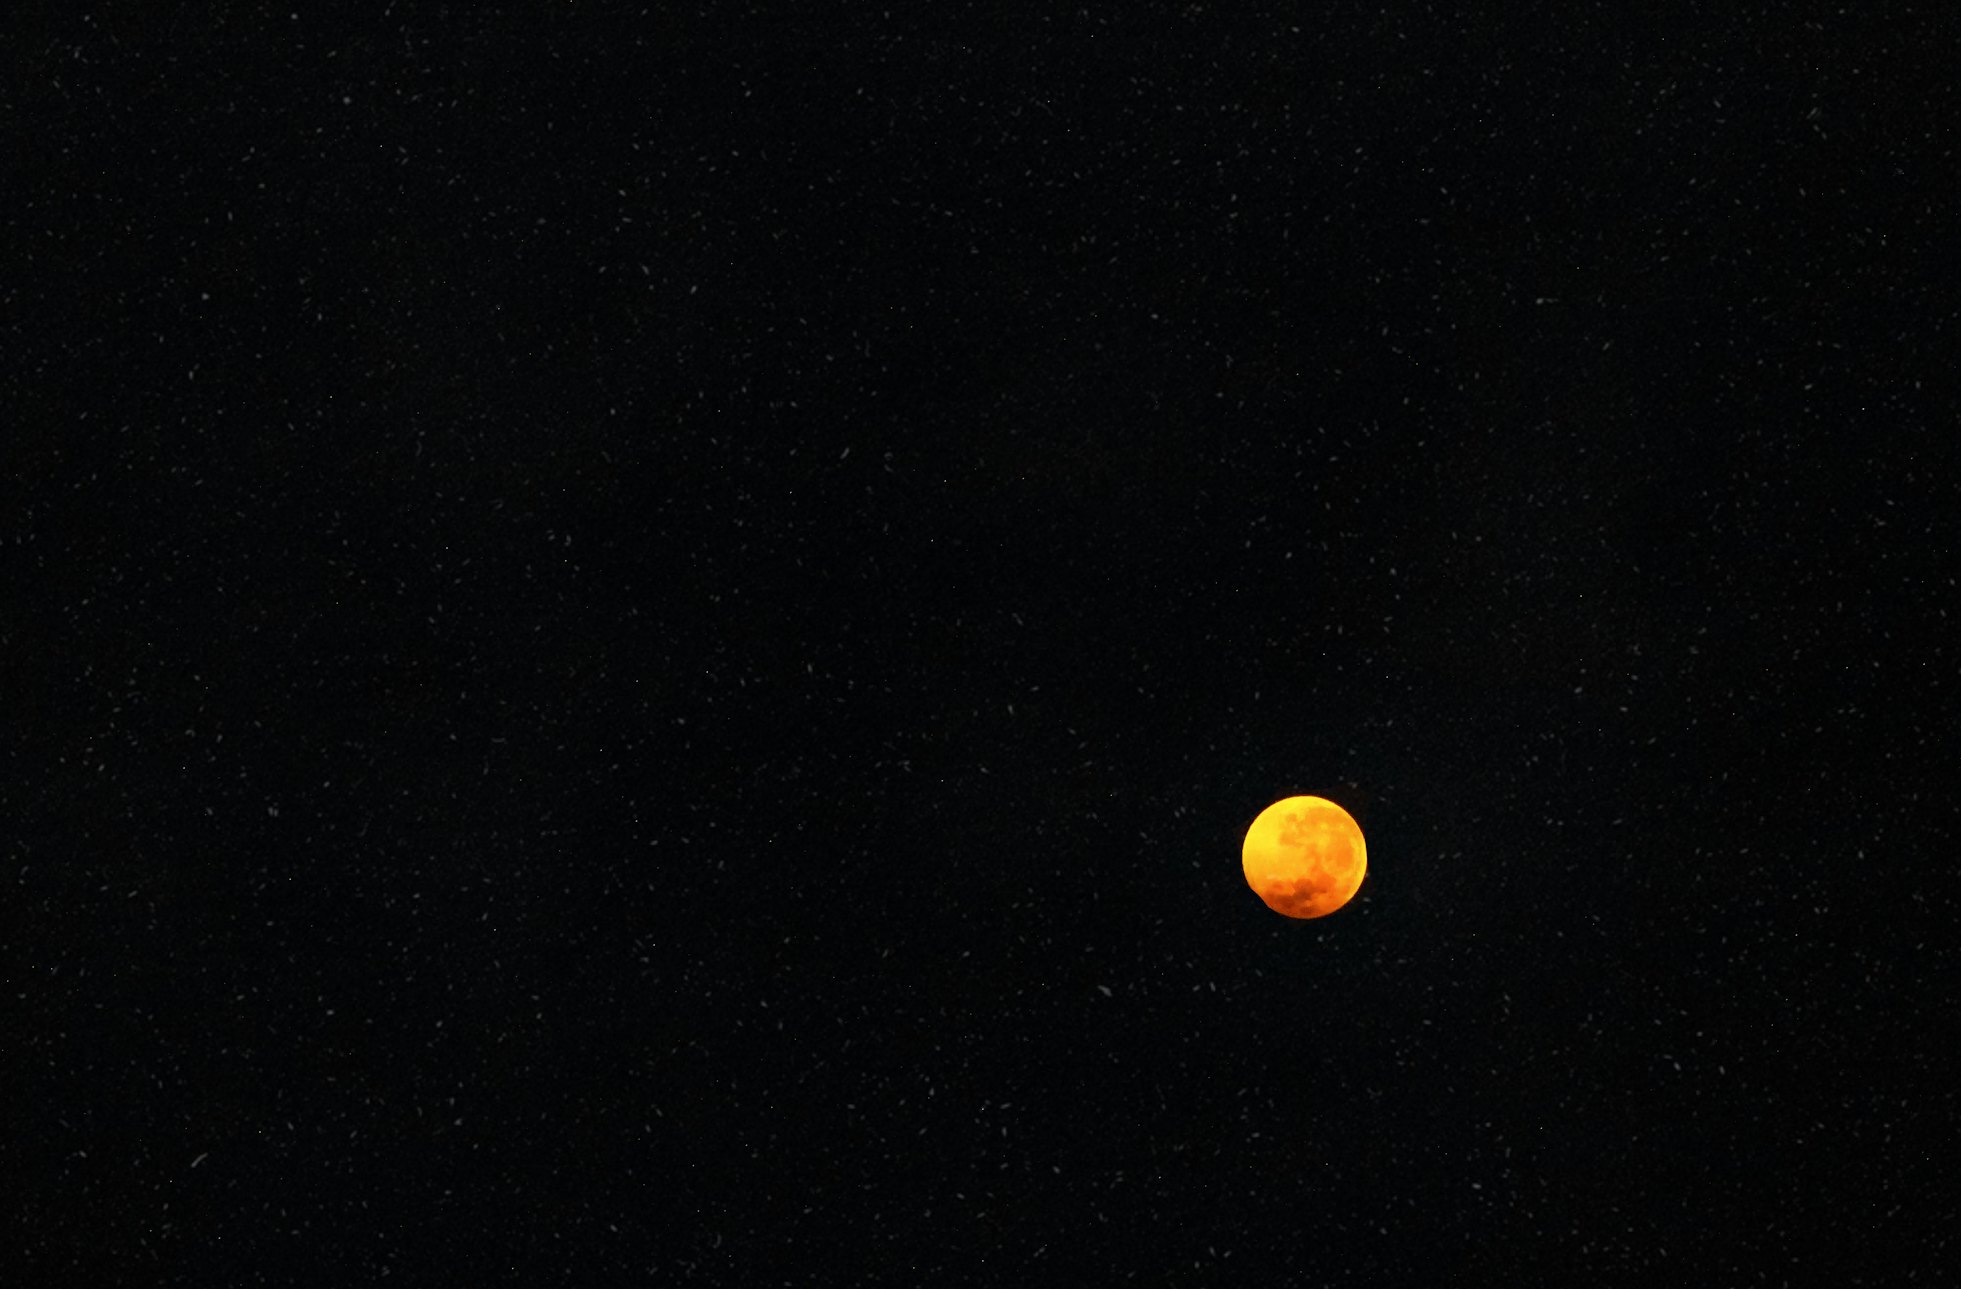 Lunar eclipse last night